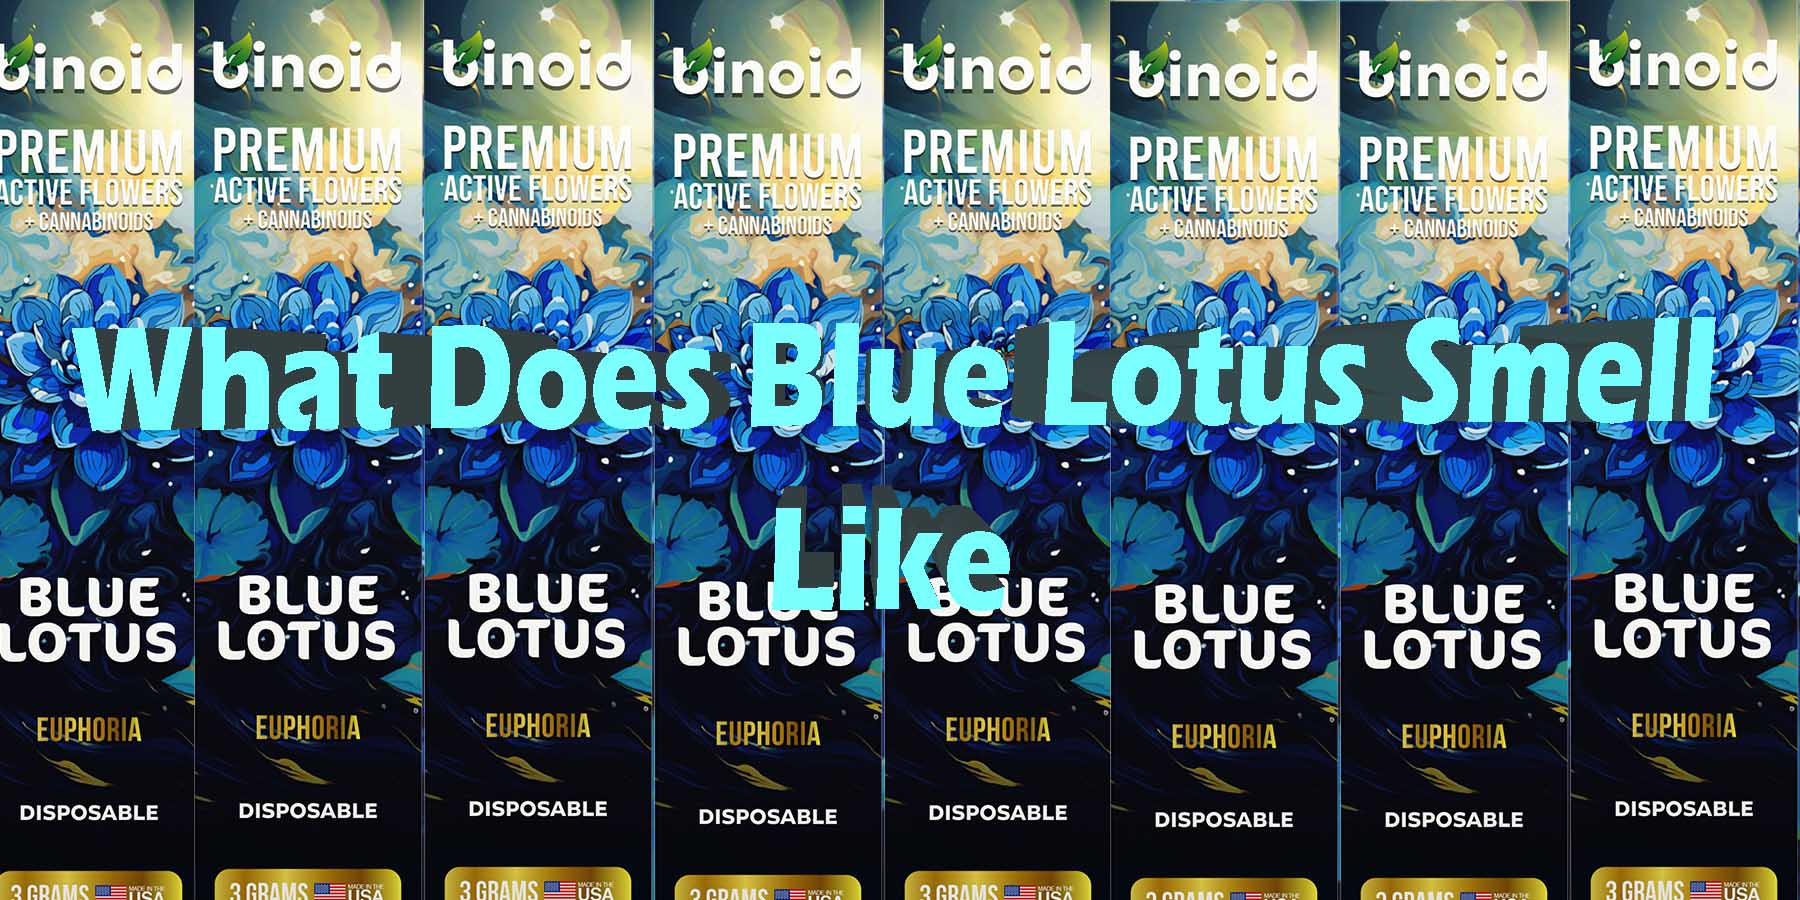 What Does Blue Lotus Smell Like WhereToBuy HowToBuy StrongestBrand BestBrand Discount SmokeShop Mushrooms StrongDisposable BrandNew Binoid